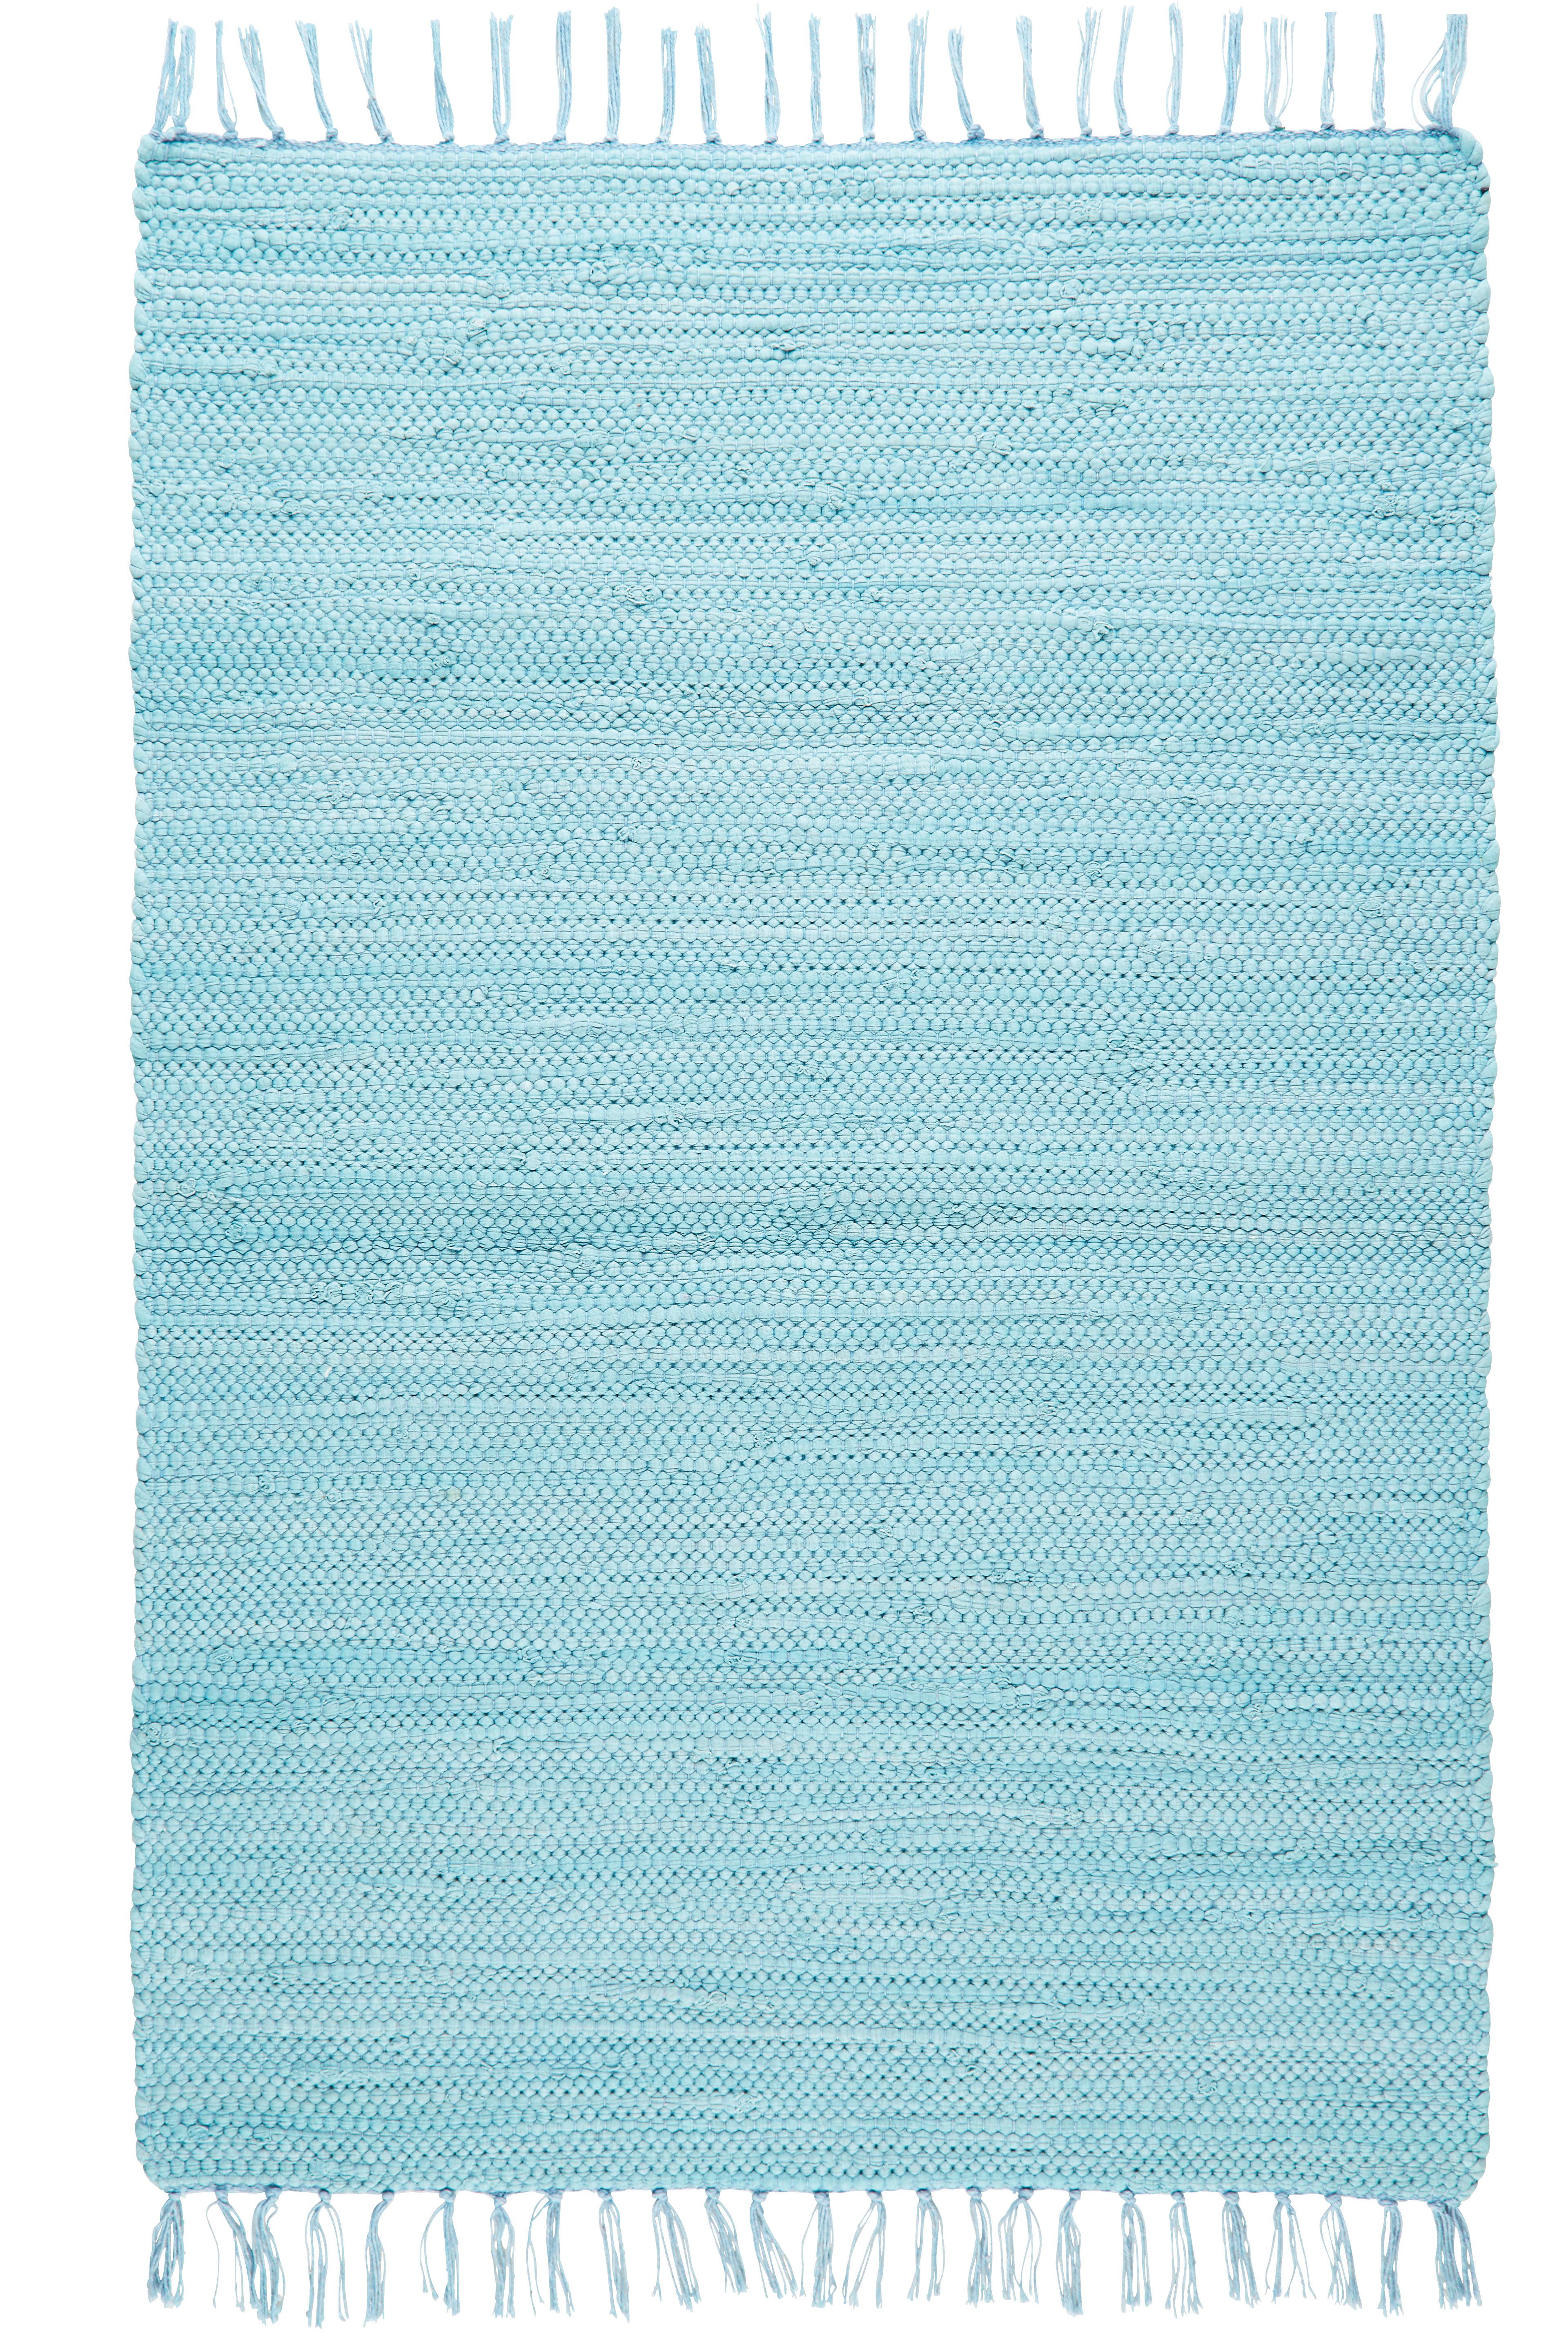 Preproga Iz Krp Julia 3 - svetlo modra, Romantika, tekstil (70/230cm) - Modern Living